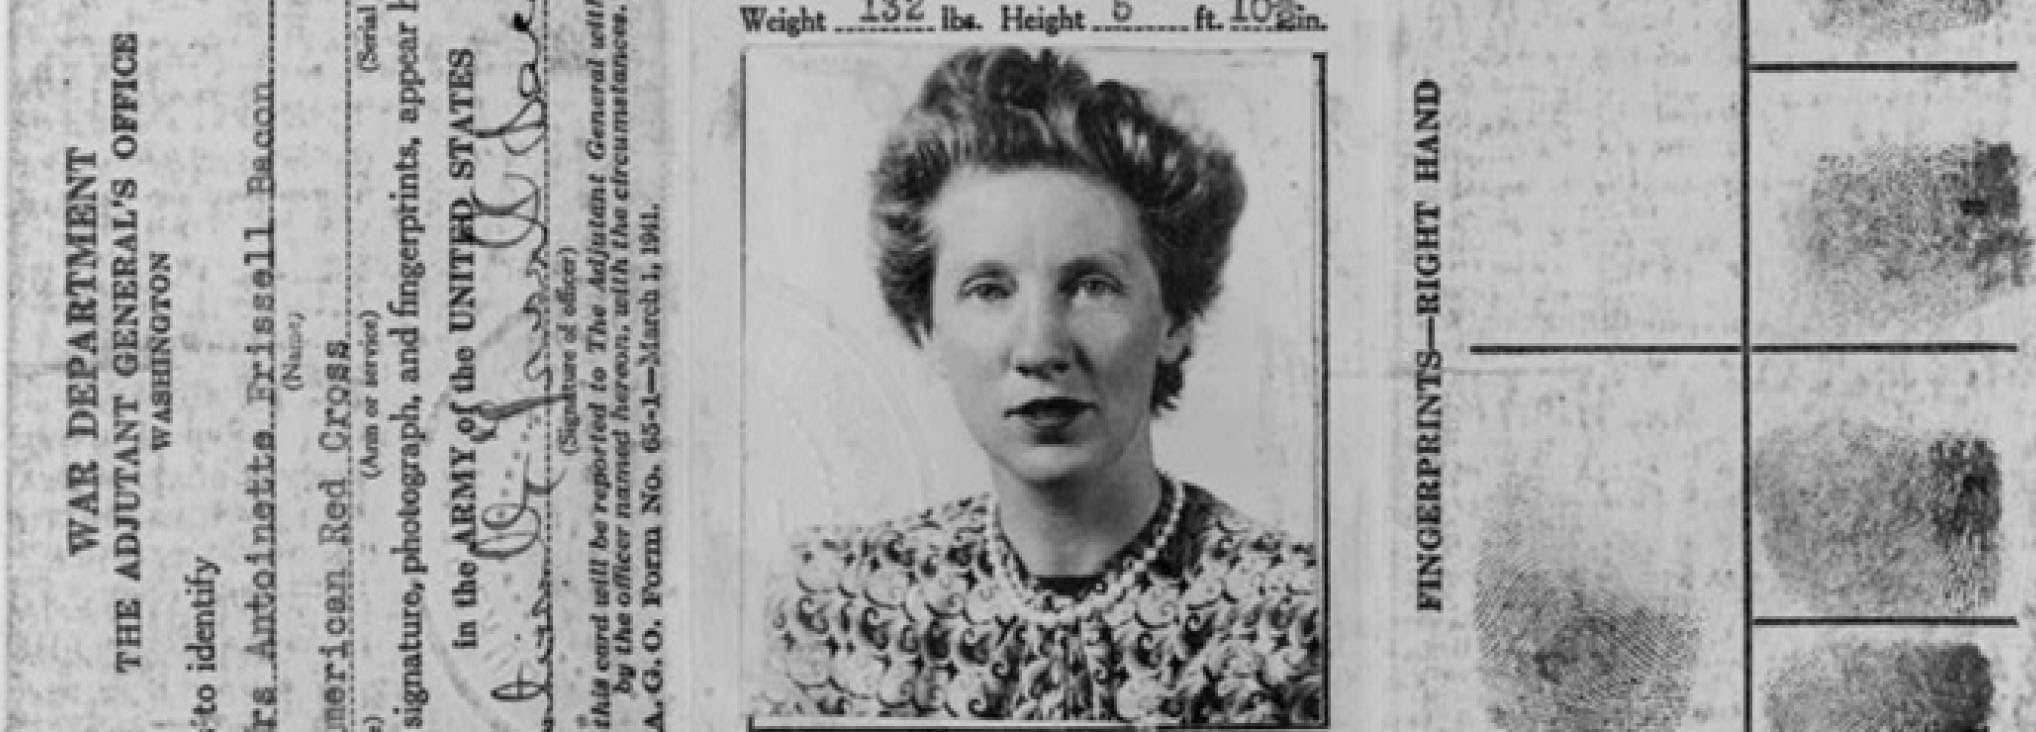 Photograph of Toni Frissell’s U.S. War Department Identification Card